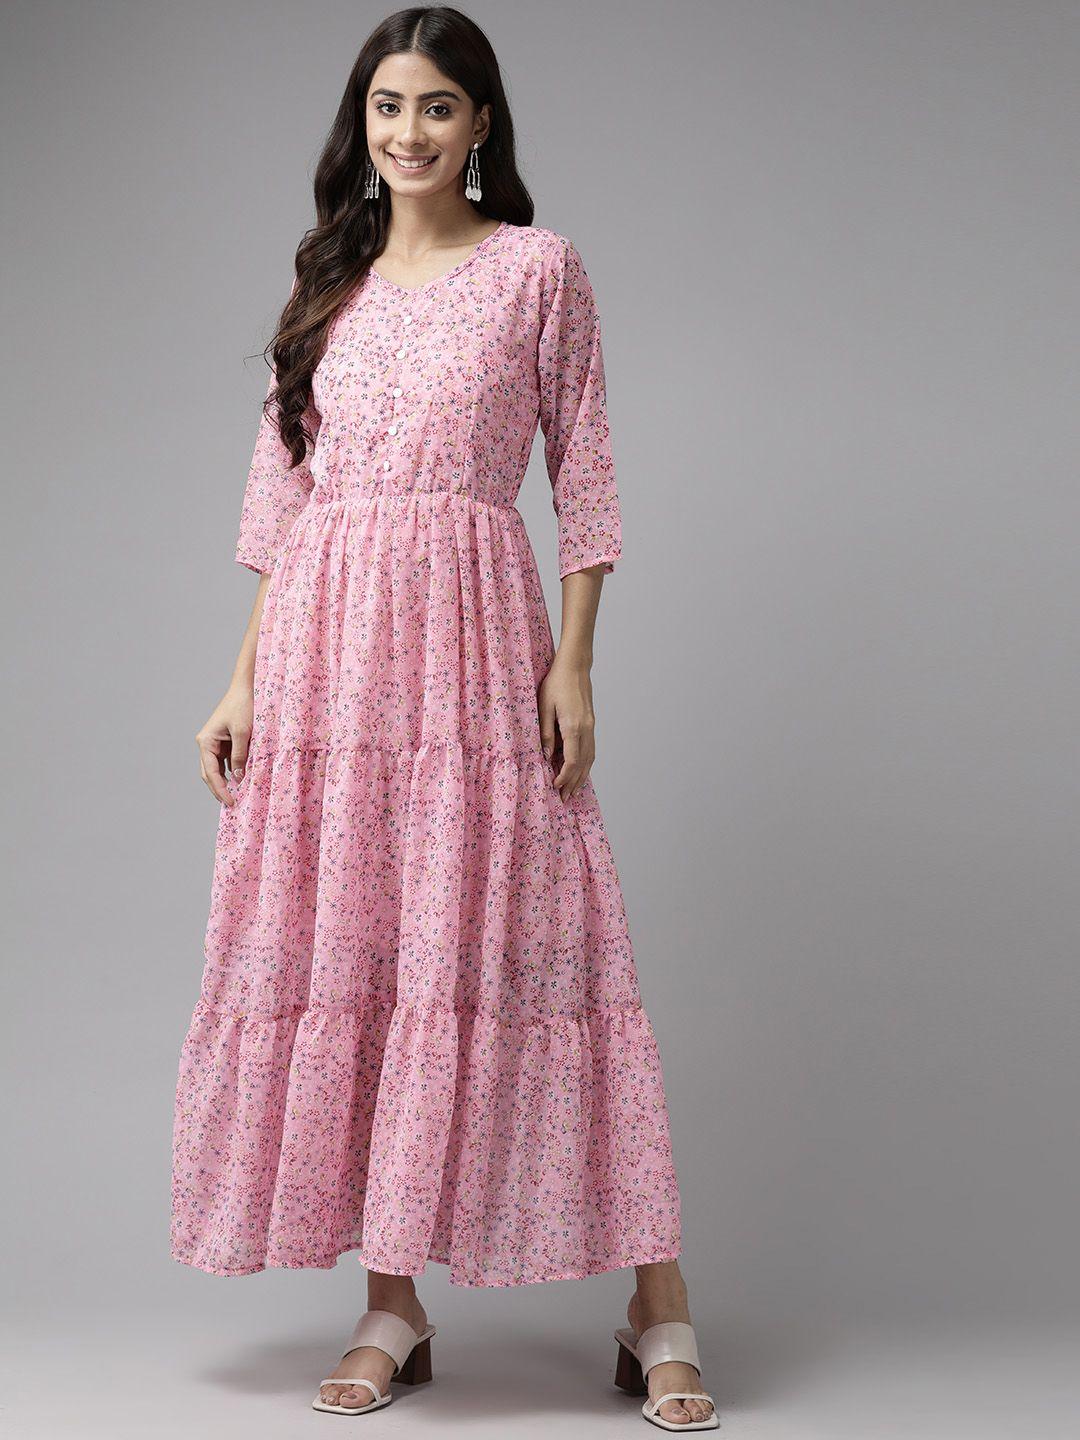 aarika-pink-floral-print-georgette-fit-&-flare-maxi-dress